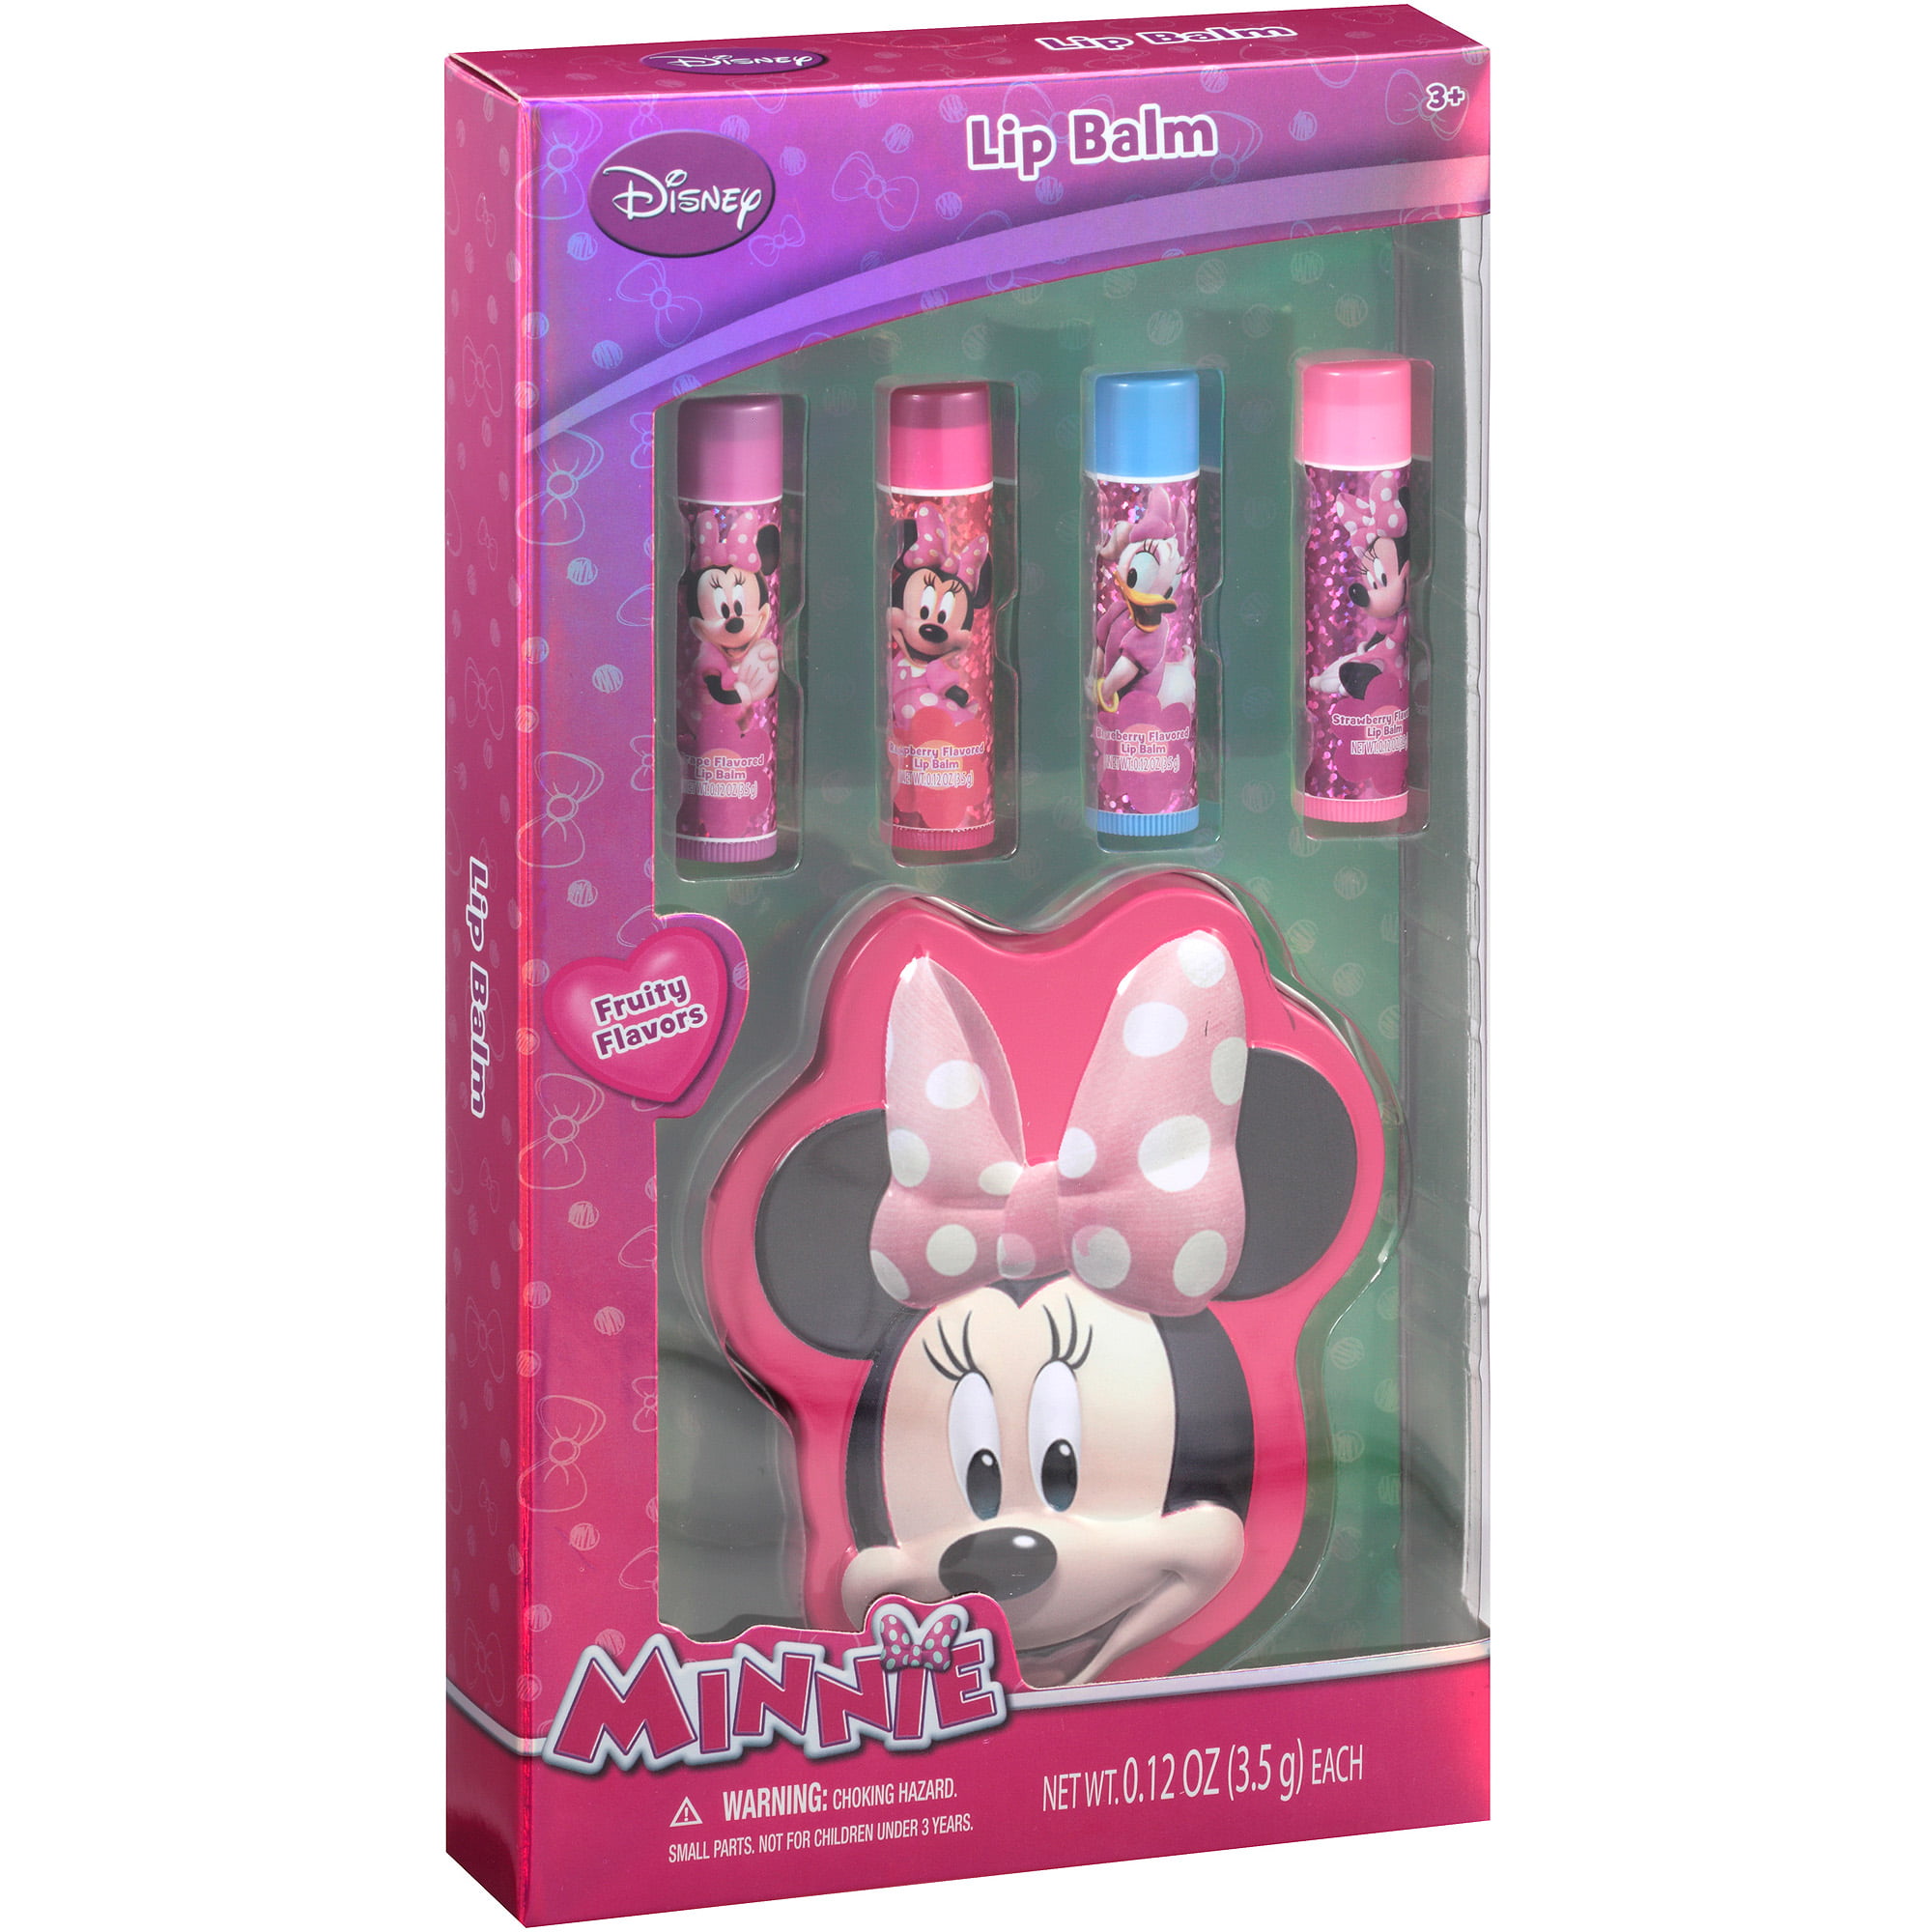 Disney Minnie Mouse Lip Balm Gift Set, 5 pc - Walmart.com - Walmart.com